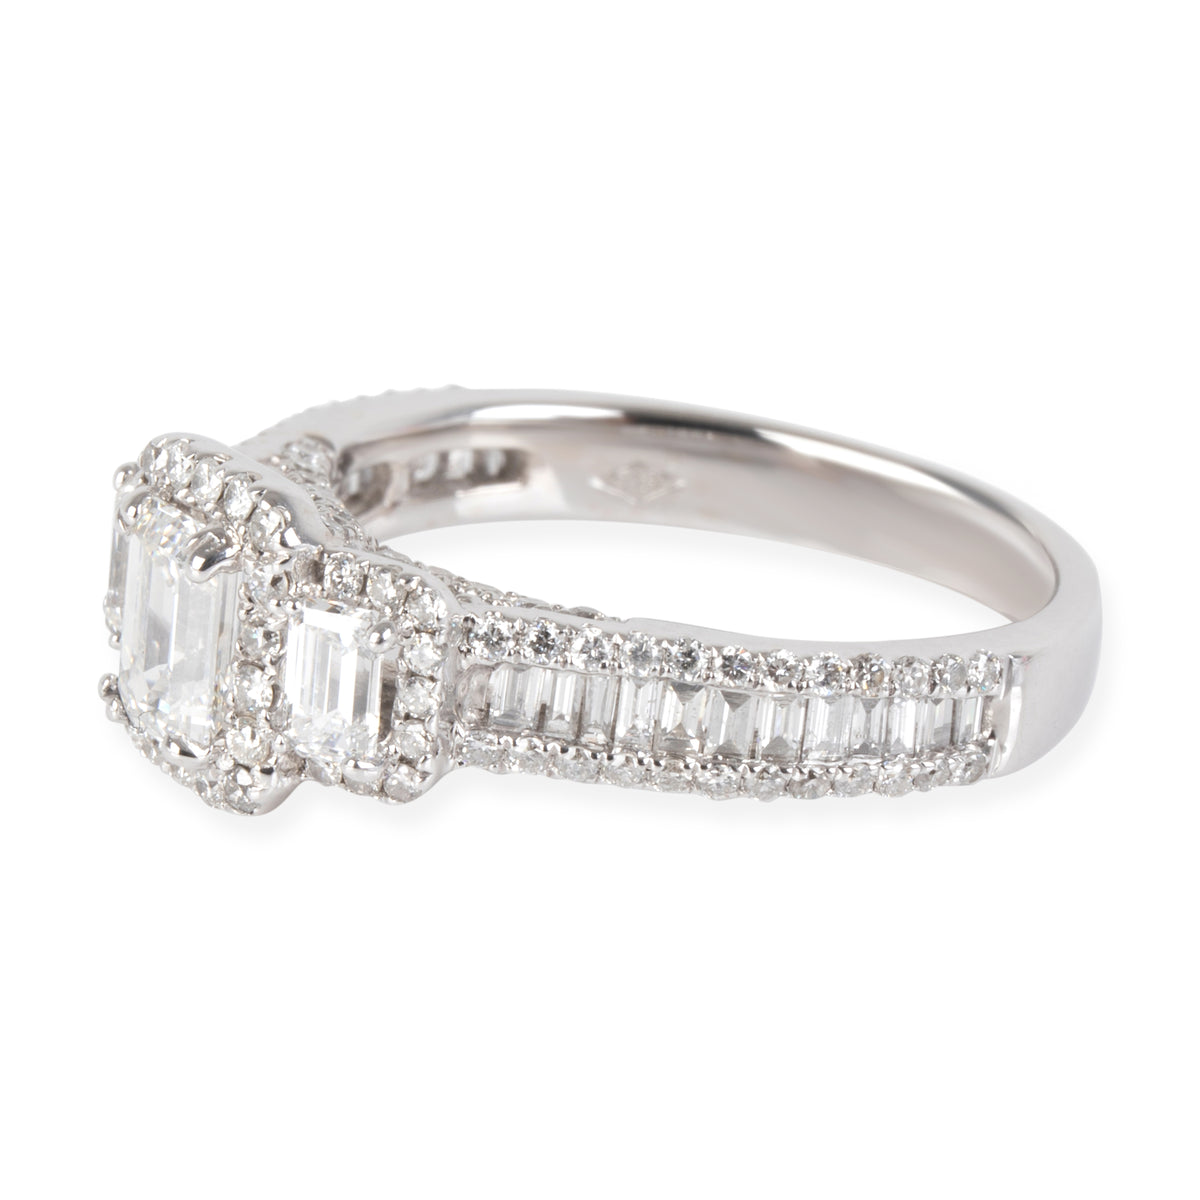 Helzberg 3 Stone Emerald Diamond Engagement Ring in 14K White Gold 1.6 CTW